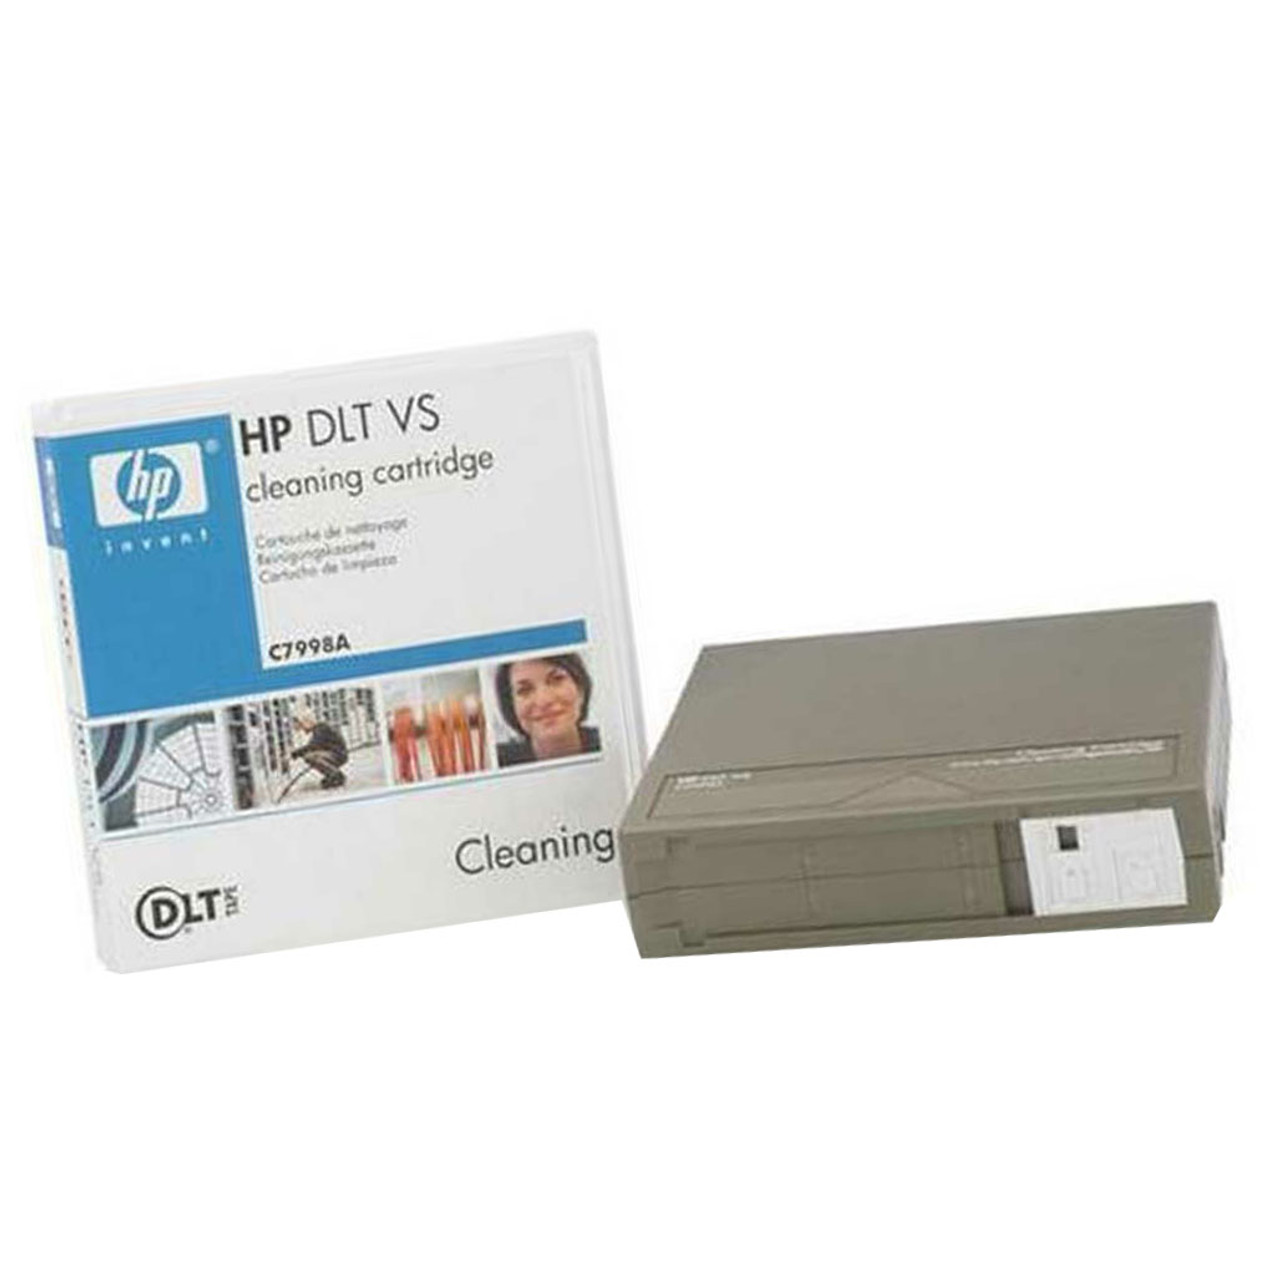 New HP C8016A DLT VS160 Cleaning Cartridge Compatible with DLT VS1, DLT VS160 & DLT-IV 